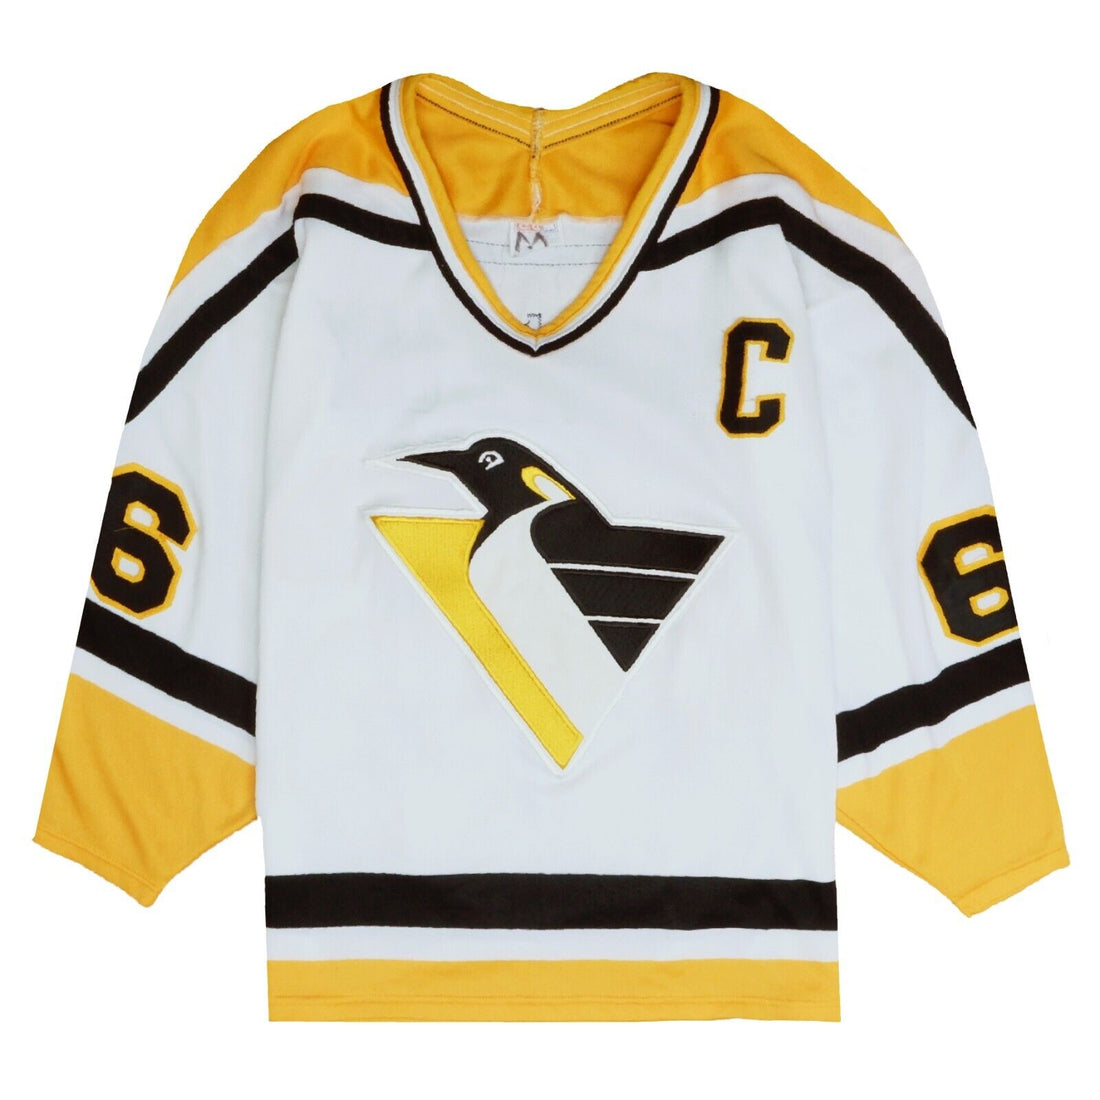 Vintage 1993 Pittsburg Penguins NHL Crest Trench Sweatshirt 